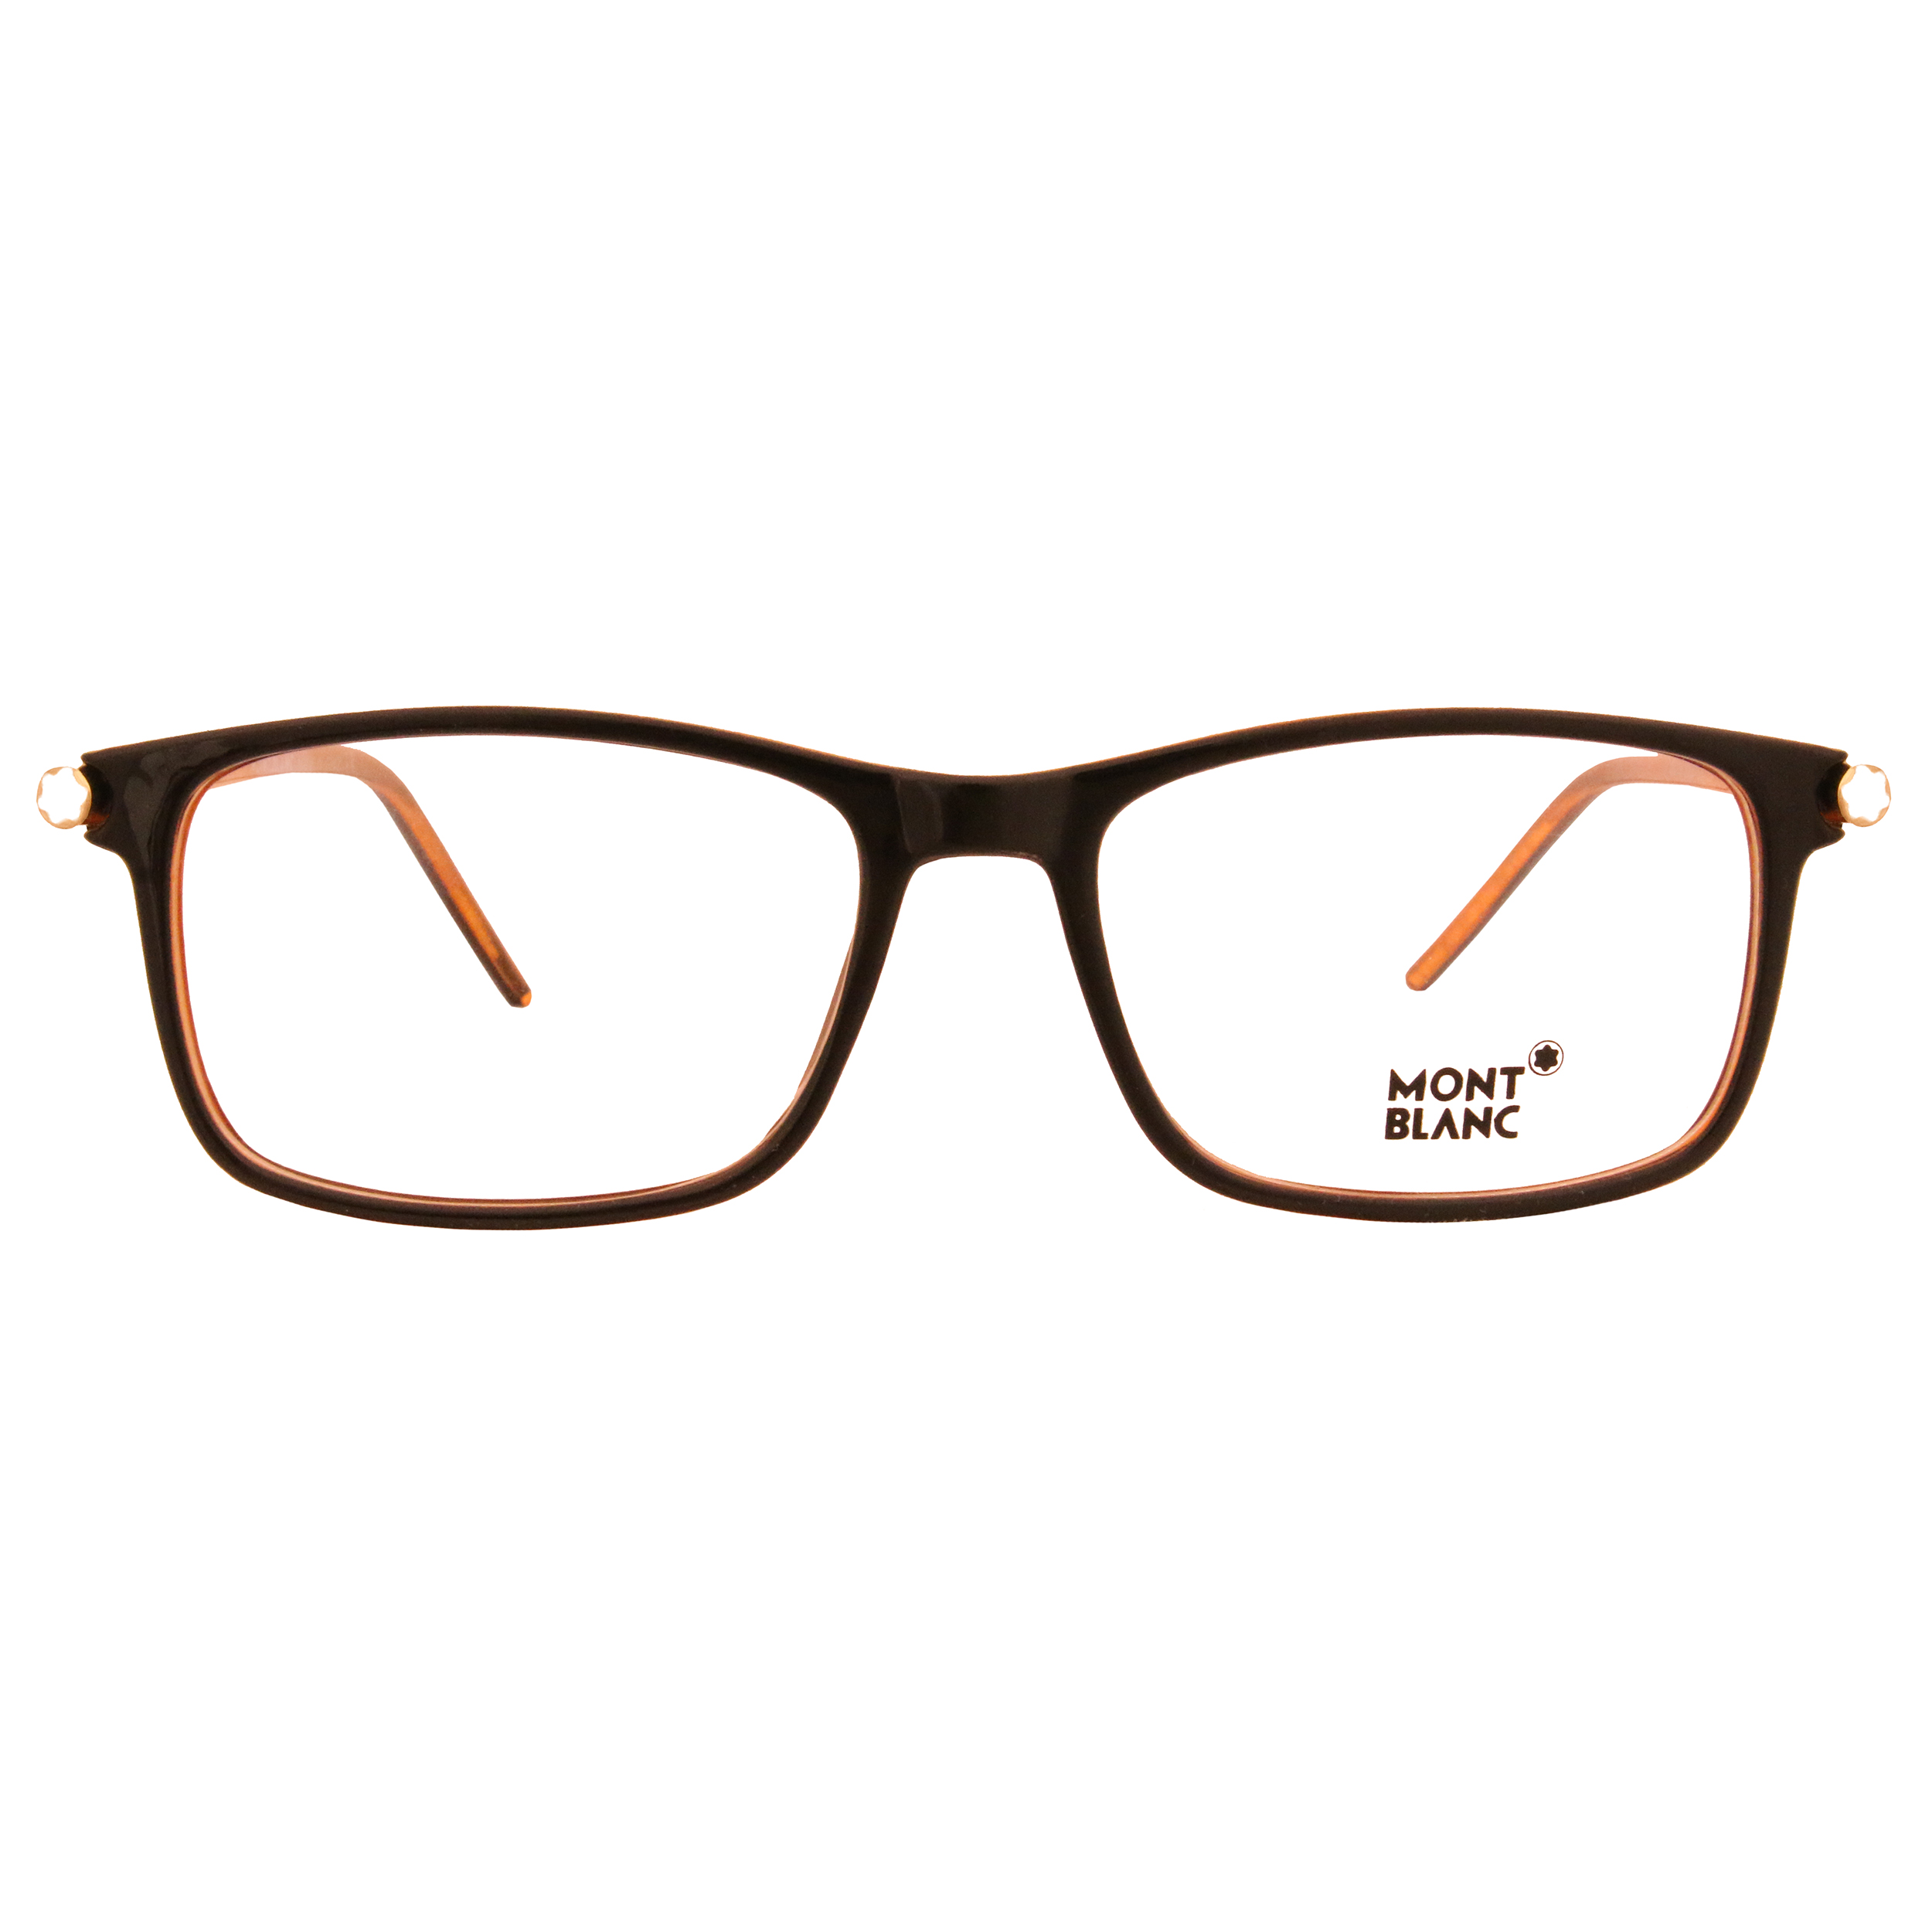 فریم عینک طبی مون بلان مدل 5019BN